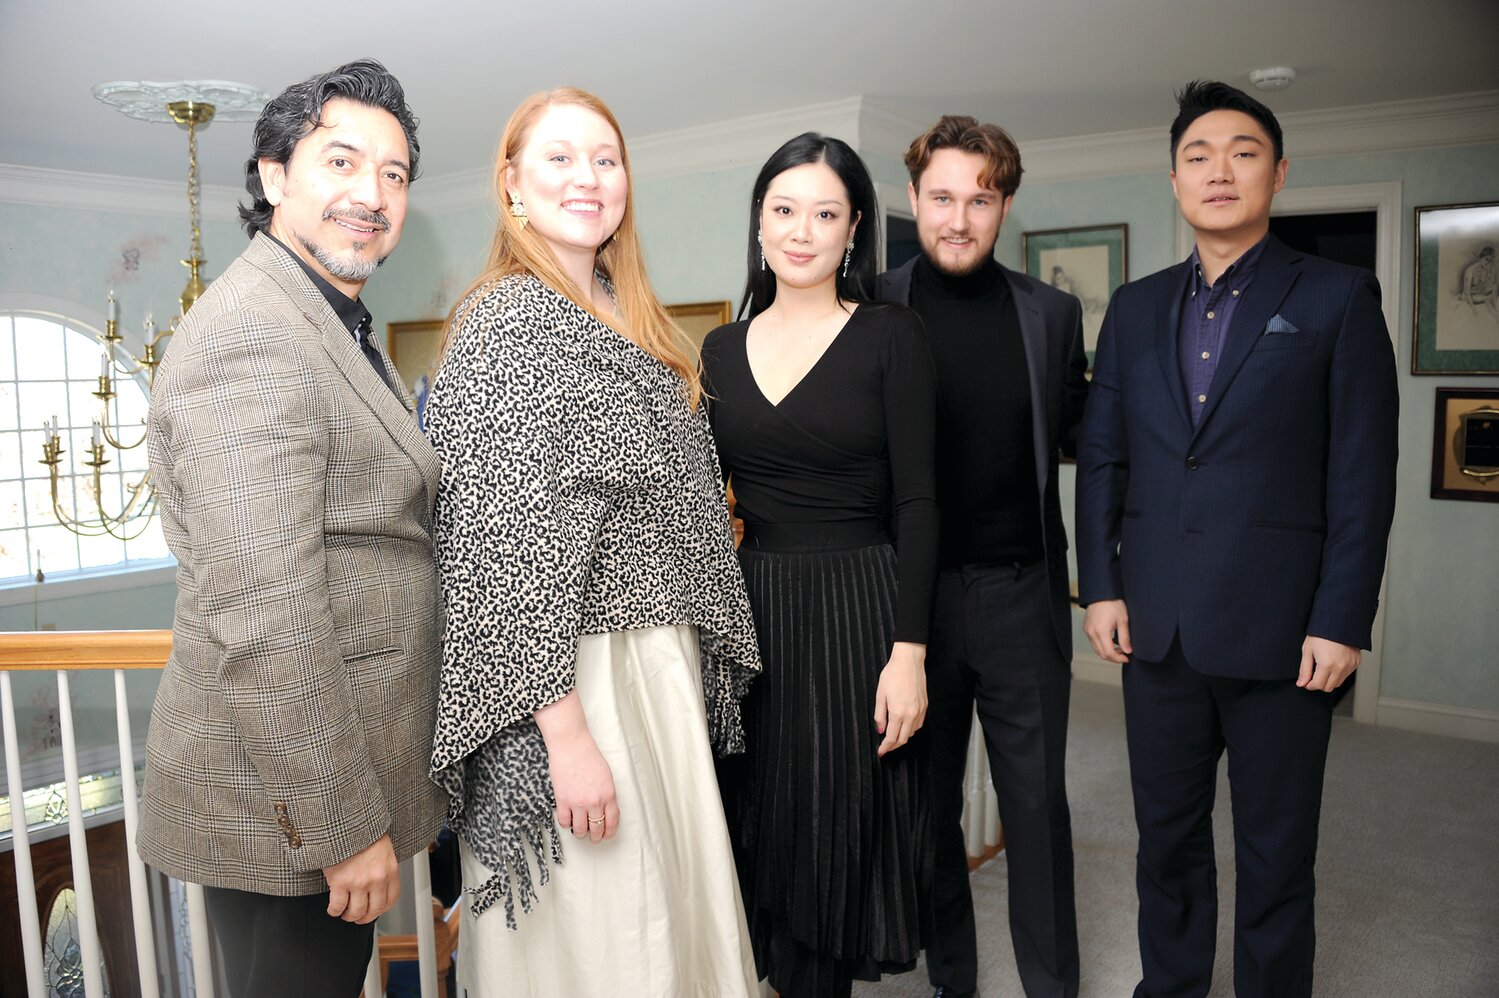 Luis Ledesma (baritone), Jenny Anne Flory (mezzo soprano), Manli Deng (soprano), Joshua Berg (tenor) and Nan Wang (bass baritone).